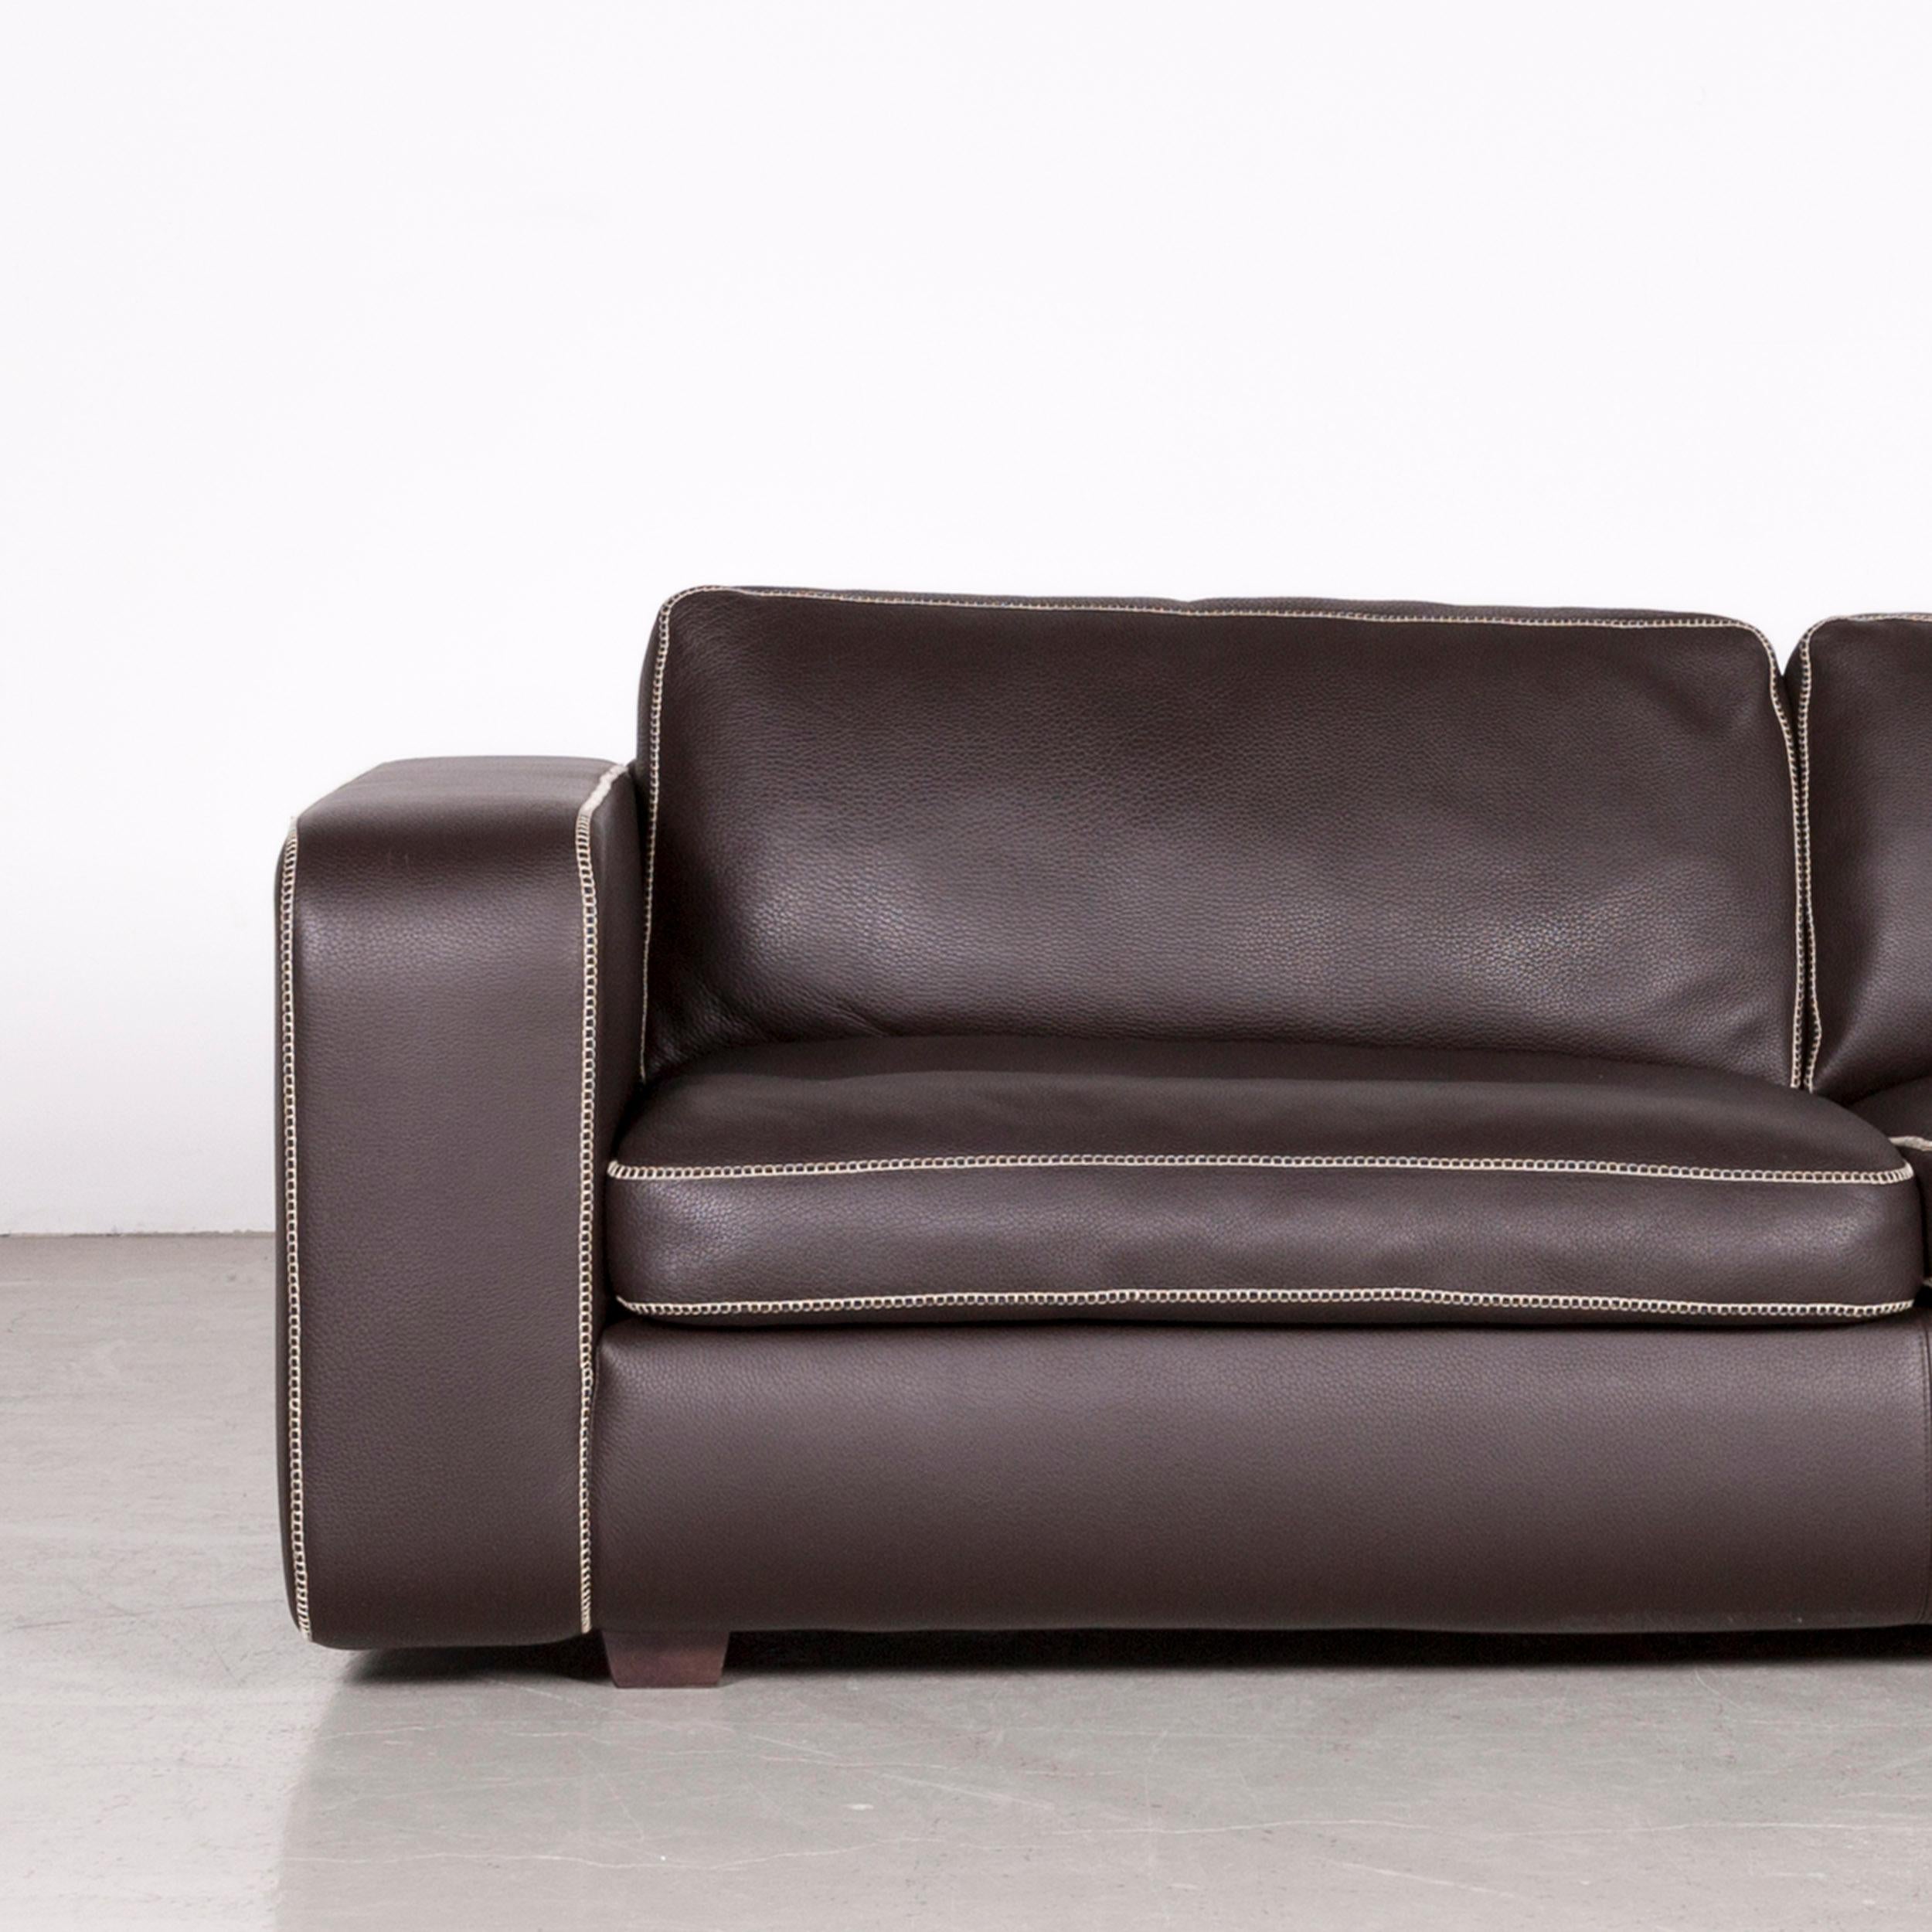 Machalke Valentino Designer Leather Sofa Brown Three-Seat Couch In Good Condition For Sale In Cologne, DE